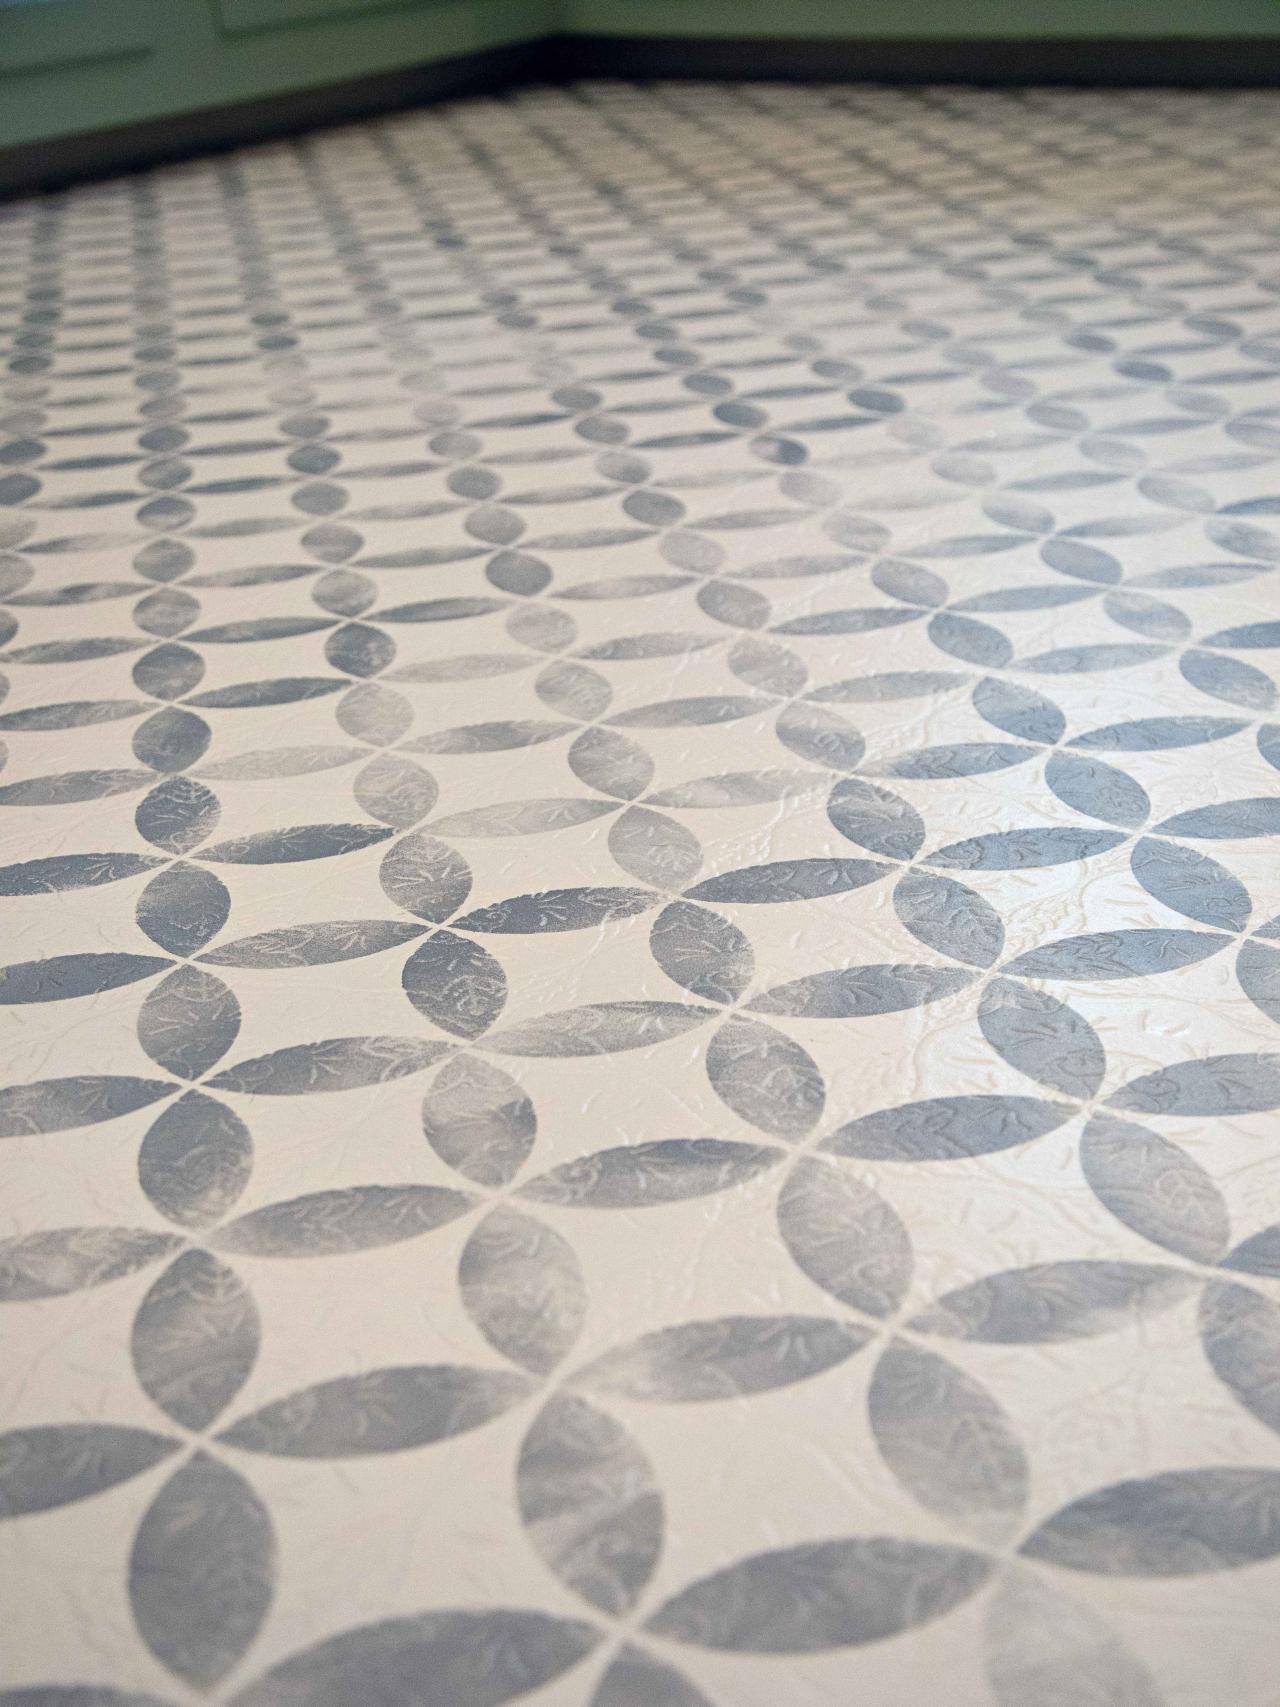 How To Paint Old Vinyl Floors Look, How To Clean Old Ceramic Tile Floors